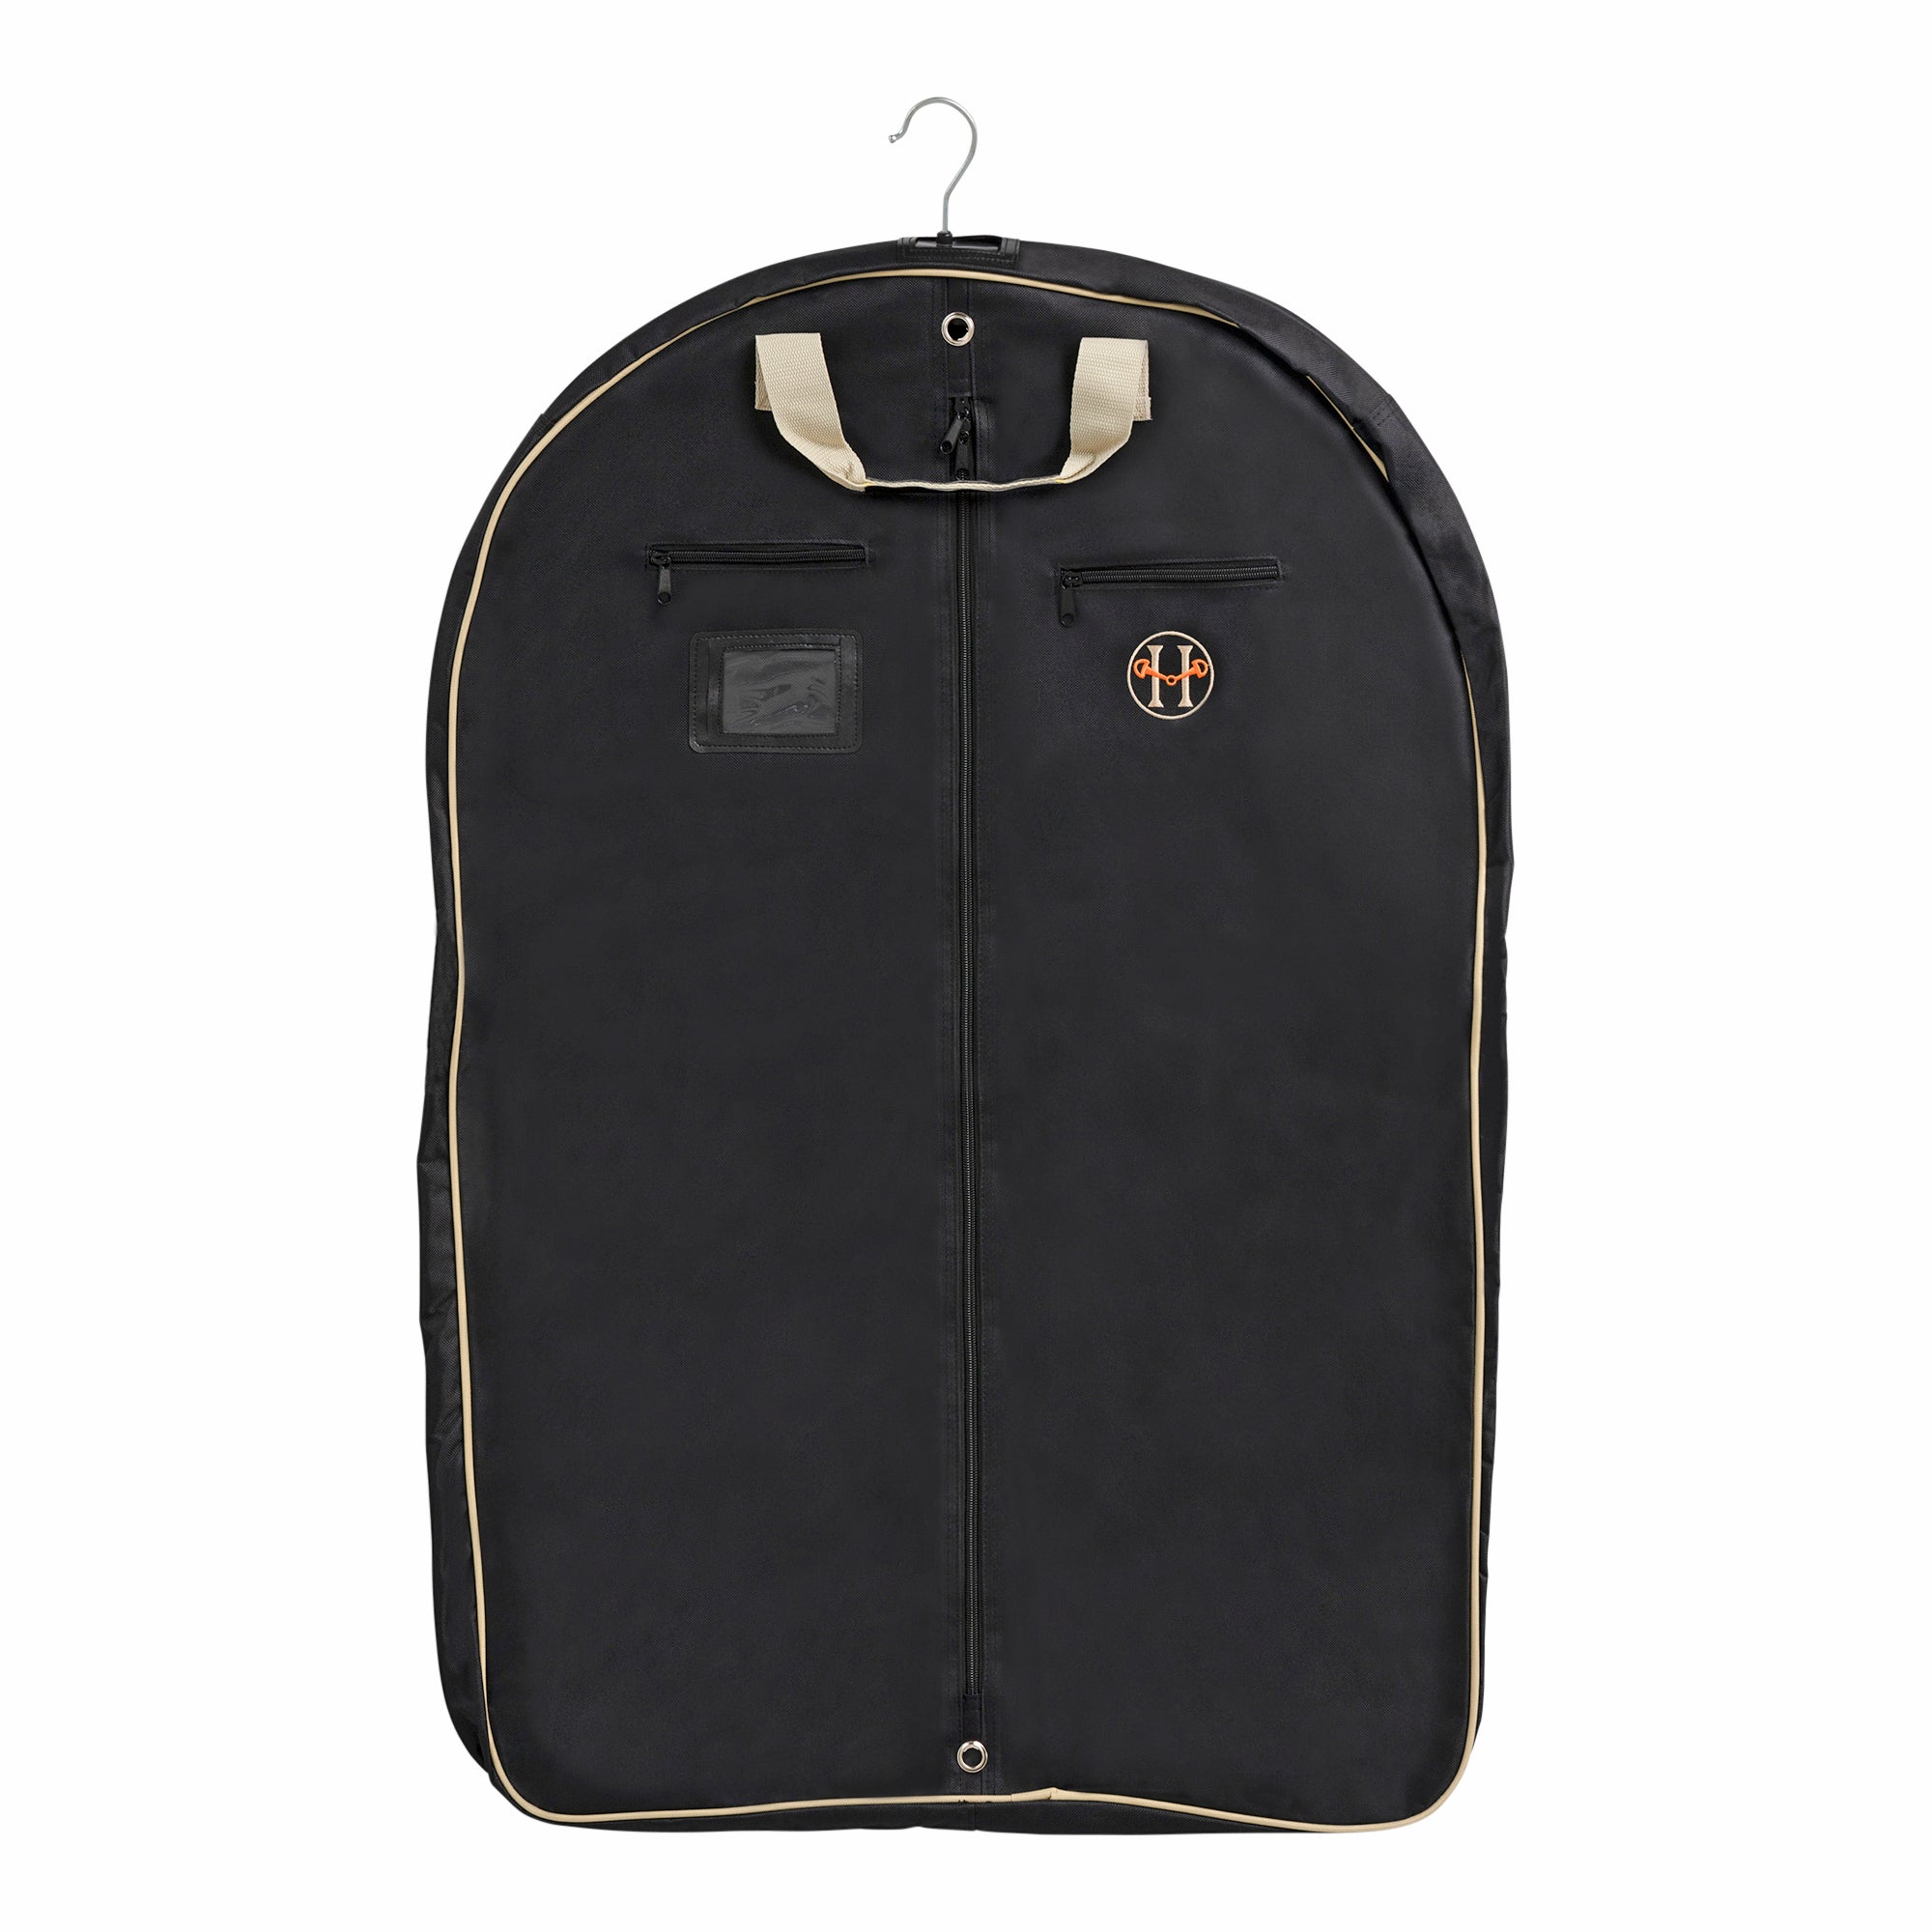 Black Garment Bag With Pockets for Dancers for Recitals 